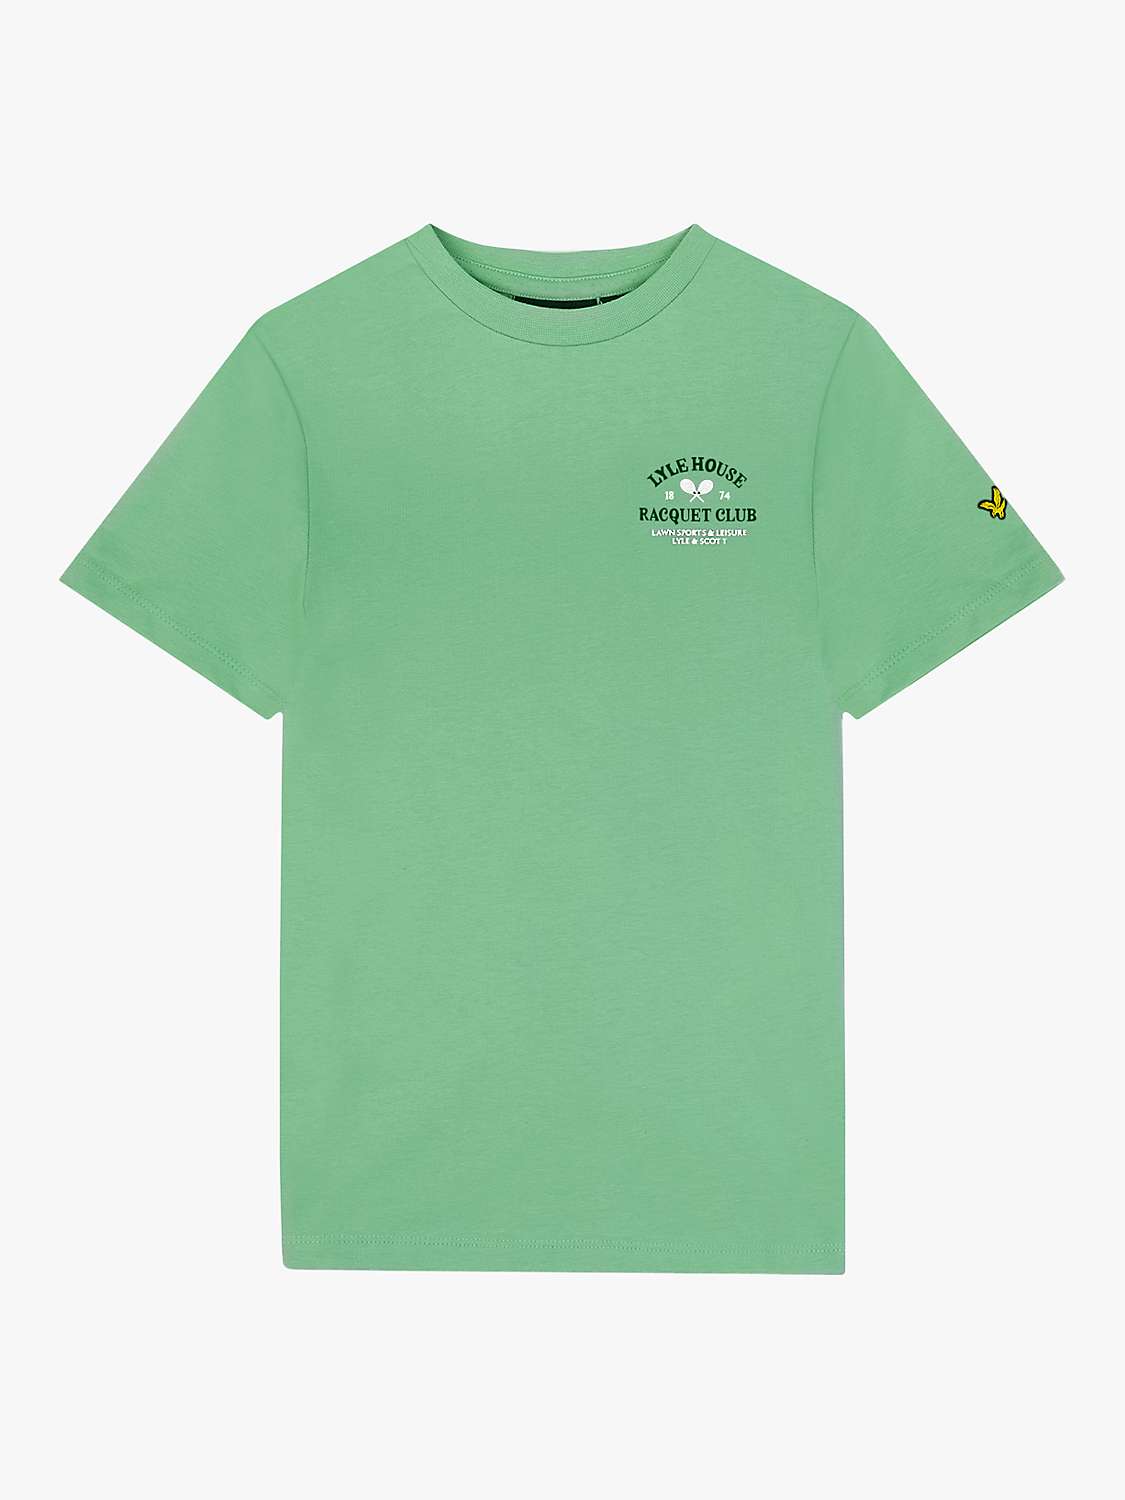 Buy Lyle & Scott Kids' Racquet Club Graphic T-Shirt, Lawn Green Online at johnlewis.com